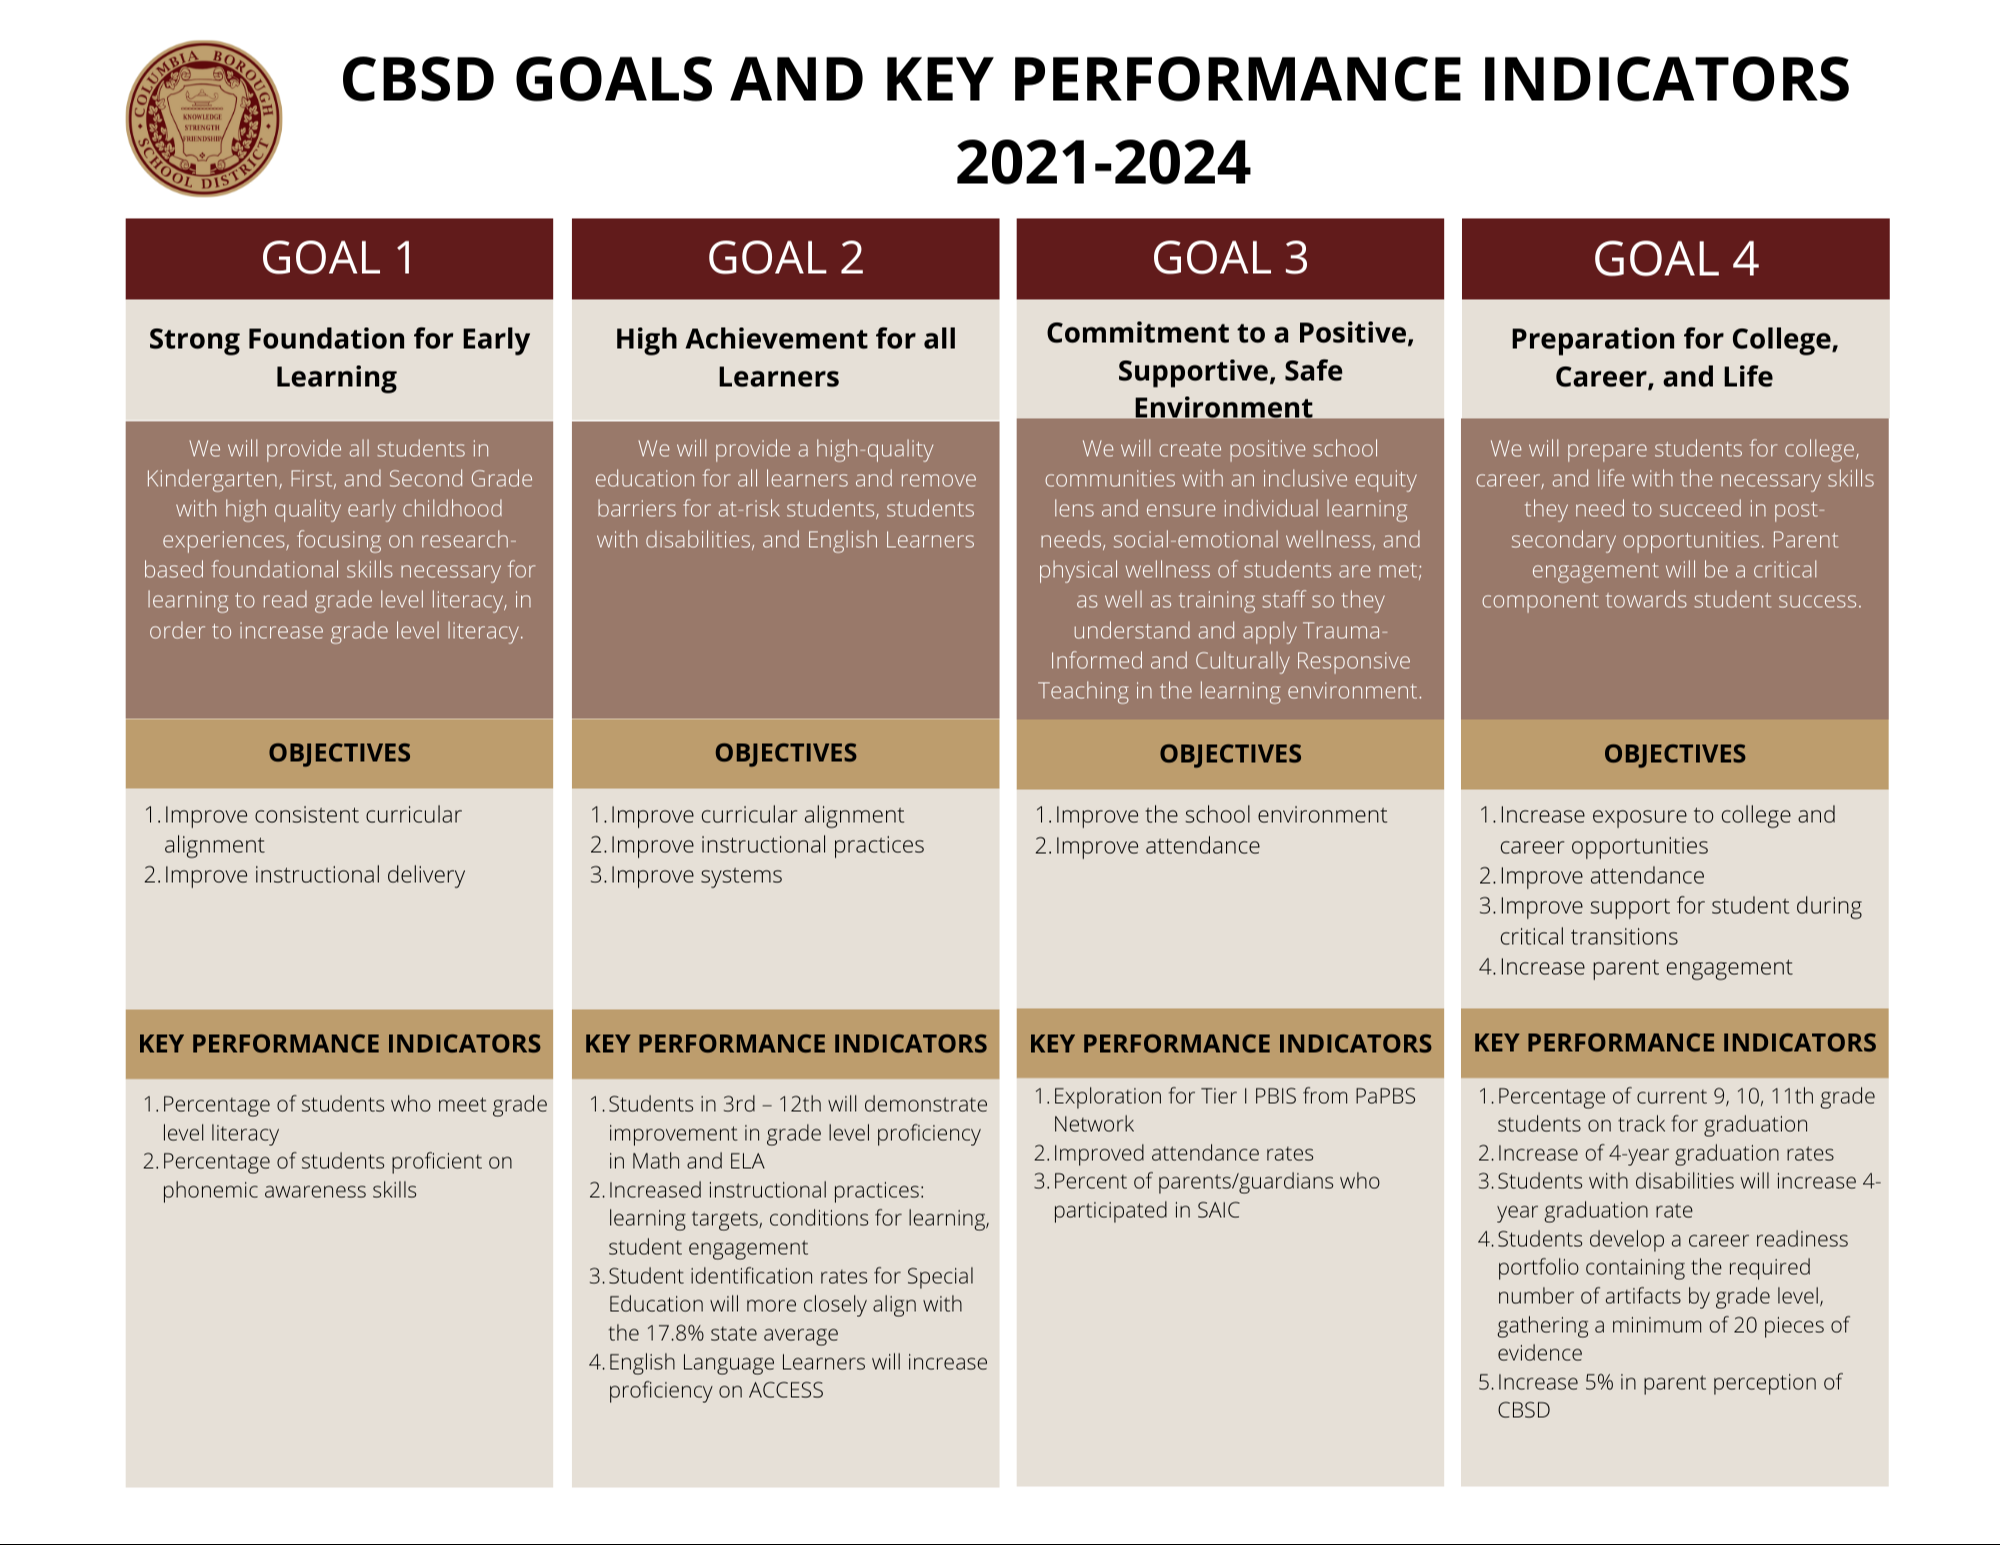 CBSD Goals and Key Performance Indicators 2021-2024 click for pdf